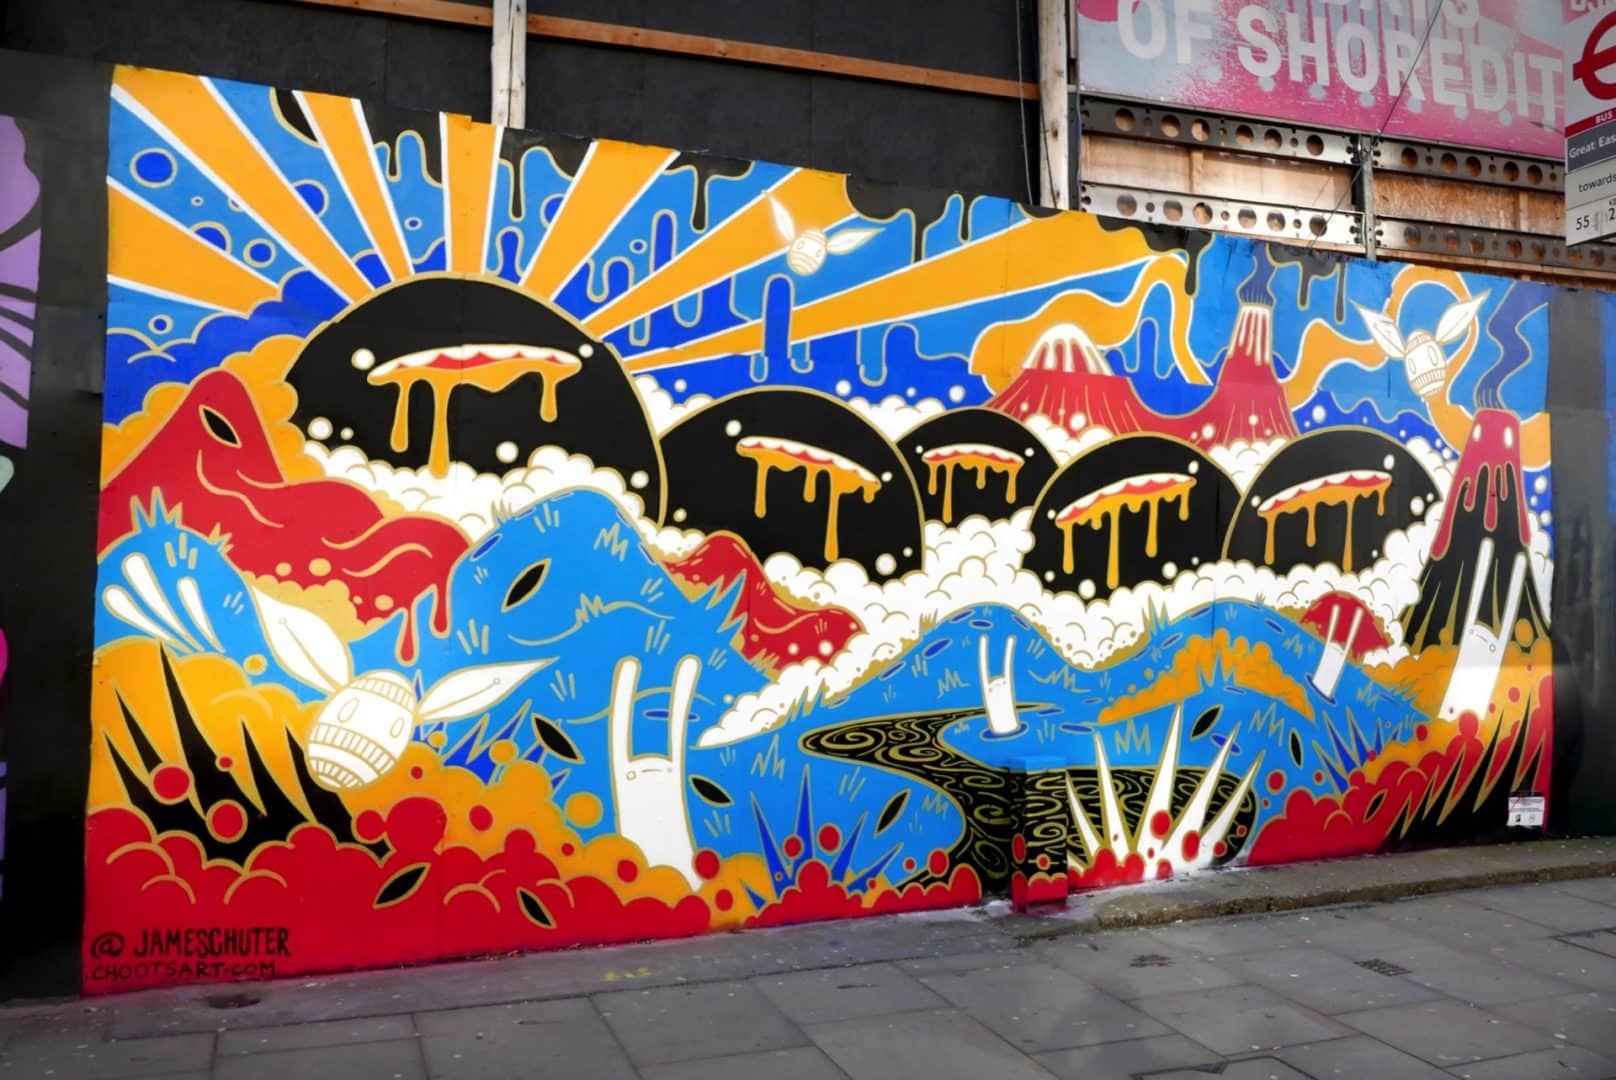 choots street art psicodelia monstruos y colores london